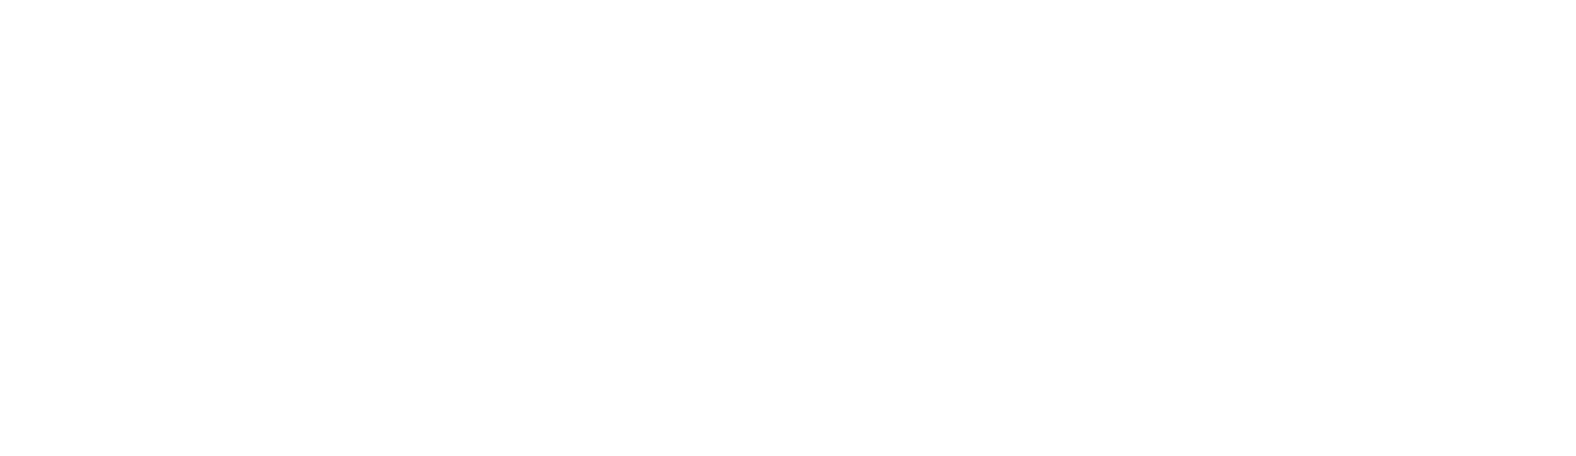 Bring Justice Home